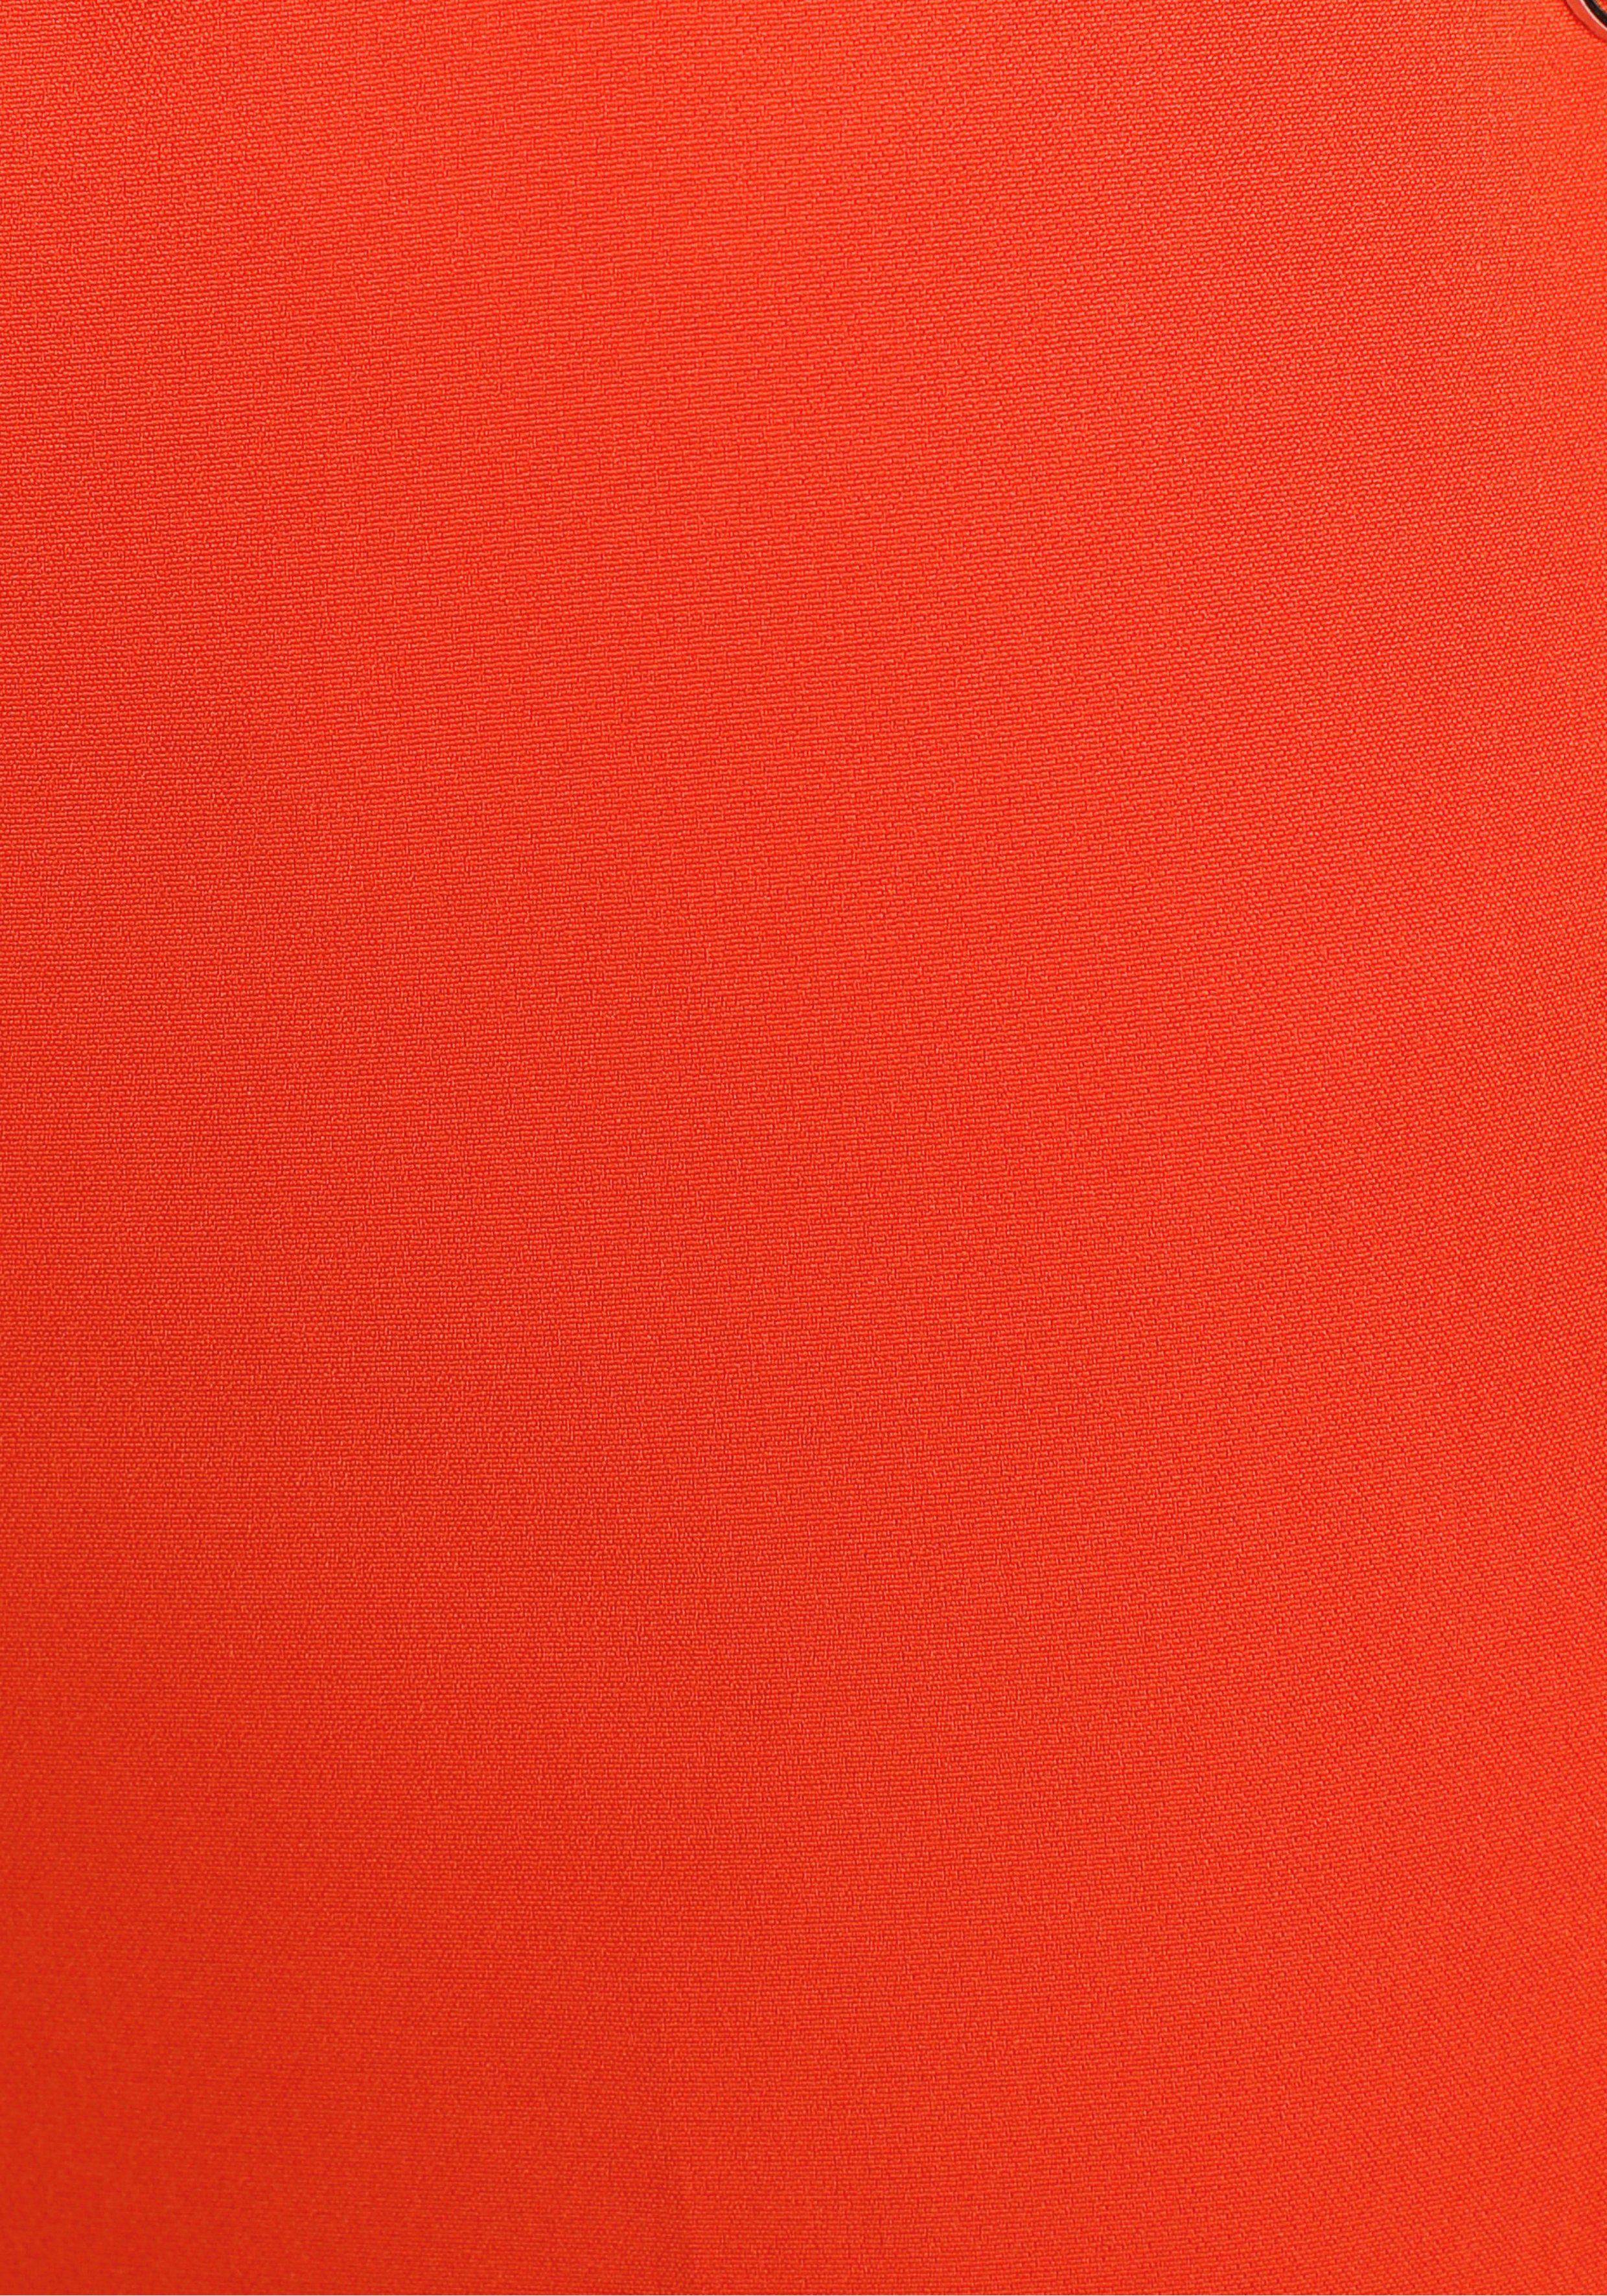 Tamaris Anzughose in Trendfarben orange (Hose Material) aus nachhaltigem